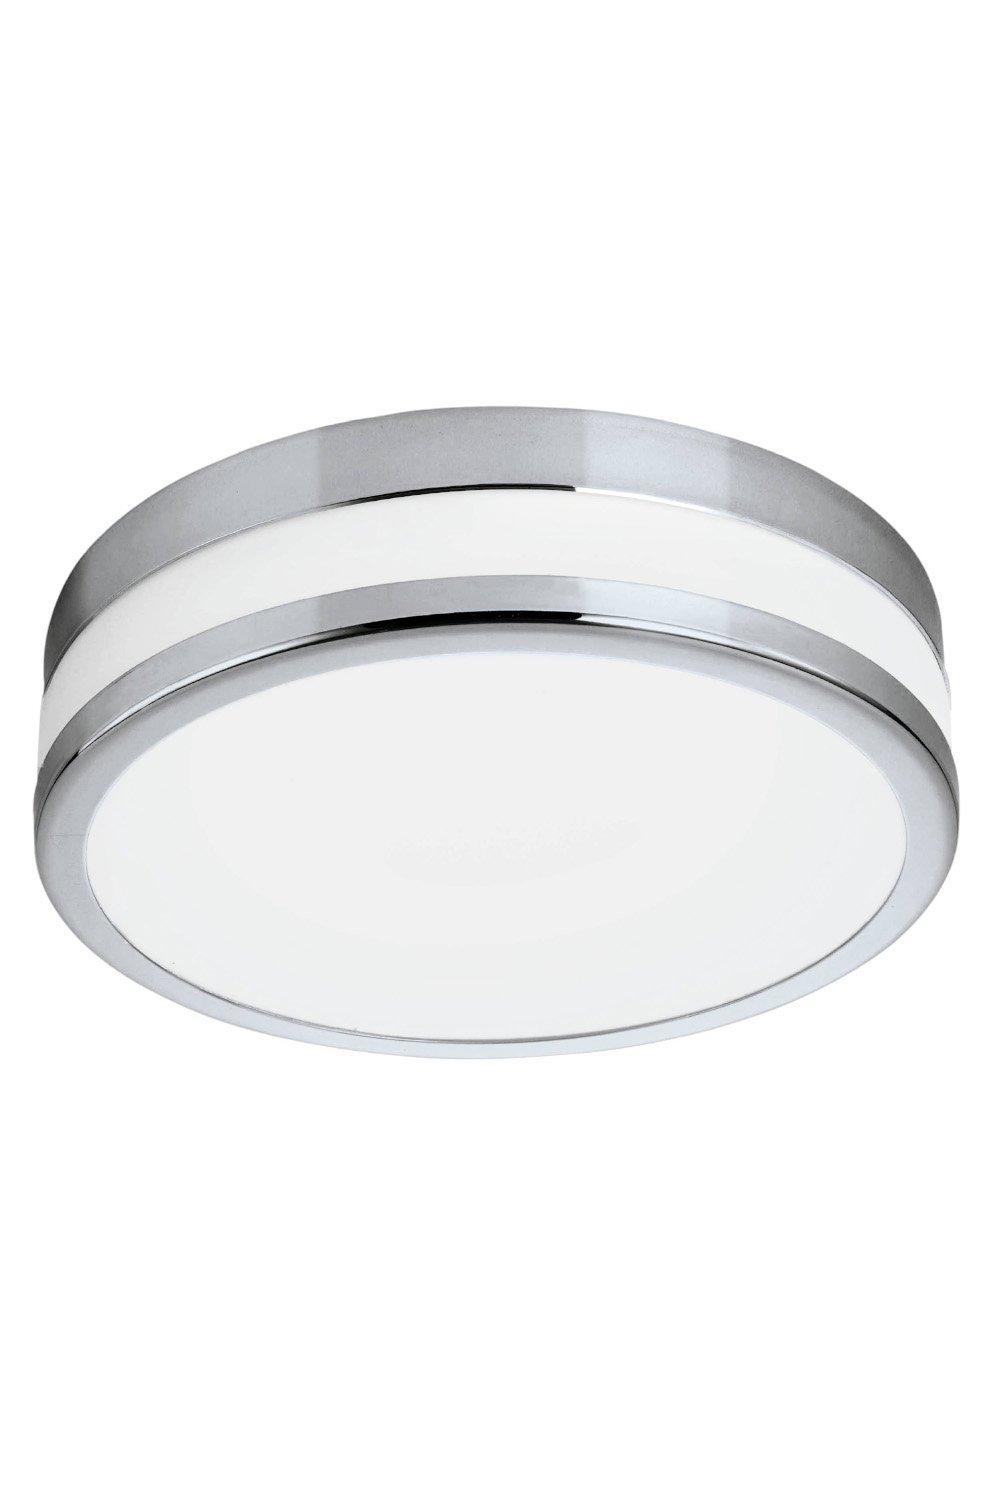 Palmero Metal and Glass IP44 Integrated LED Bathroom Ceiling Flush Light